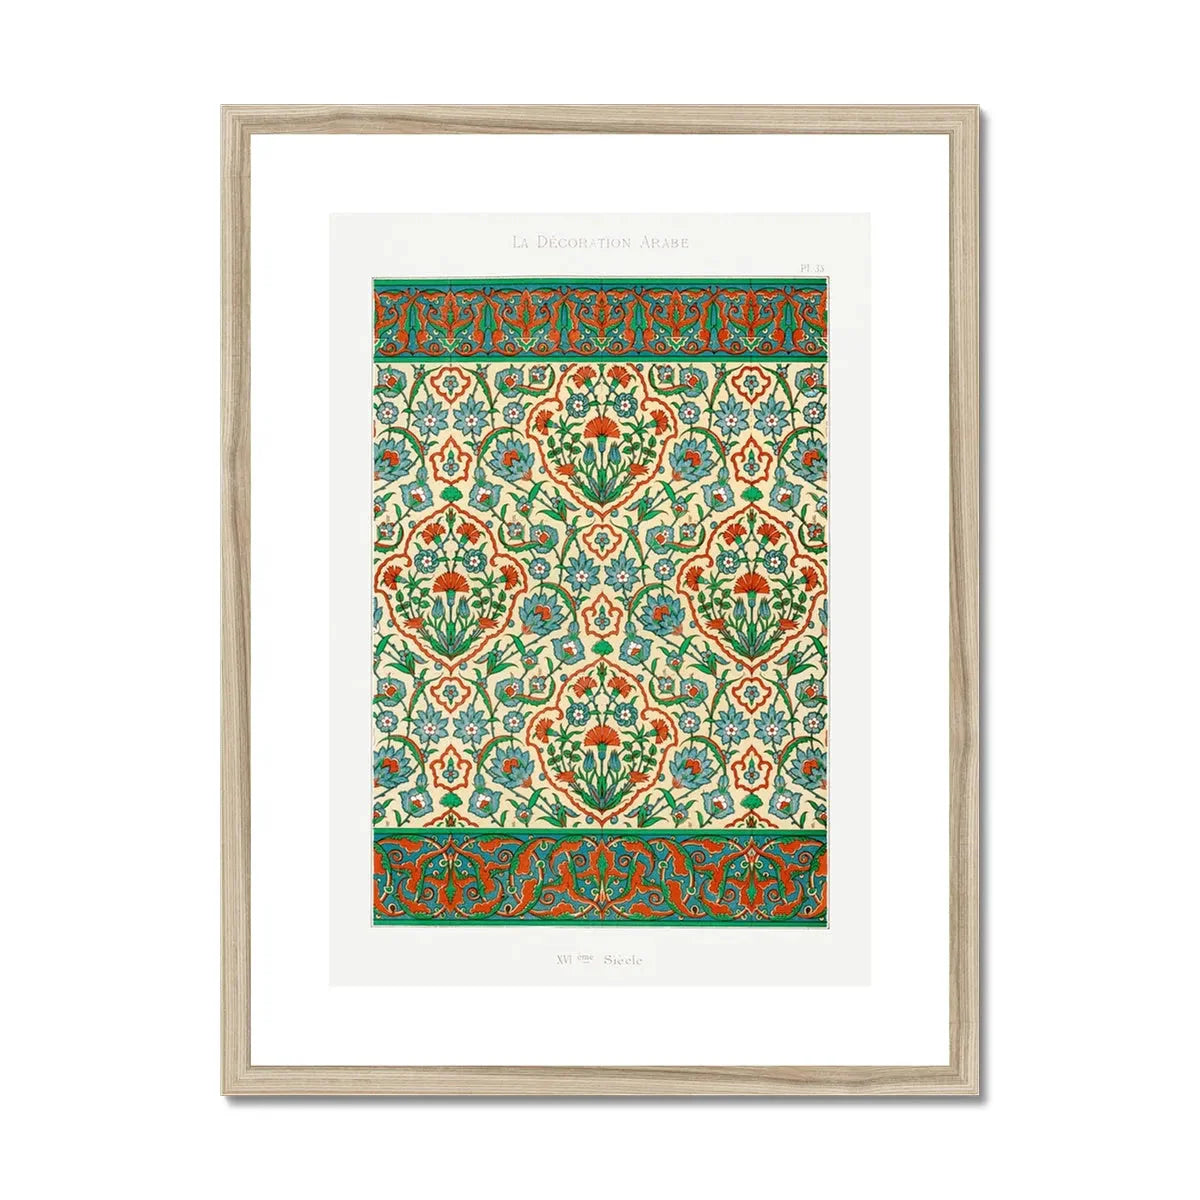 Emile Prisse D’avennes Pattern La Decoration Arabe Plate 33 Framed & Mounted Print - Posters Prints & Visual Artwork